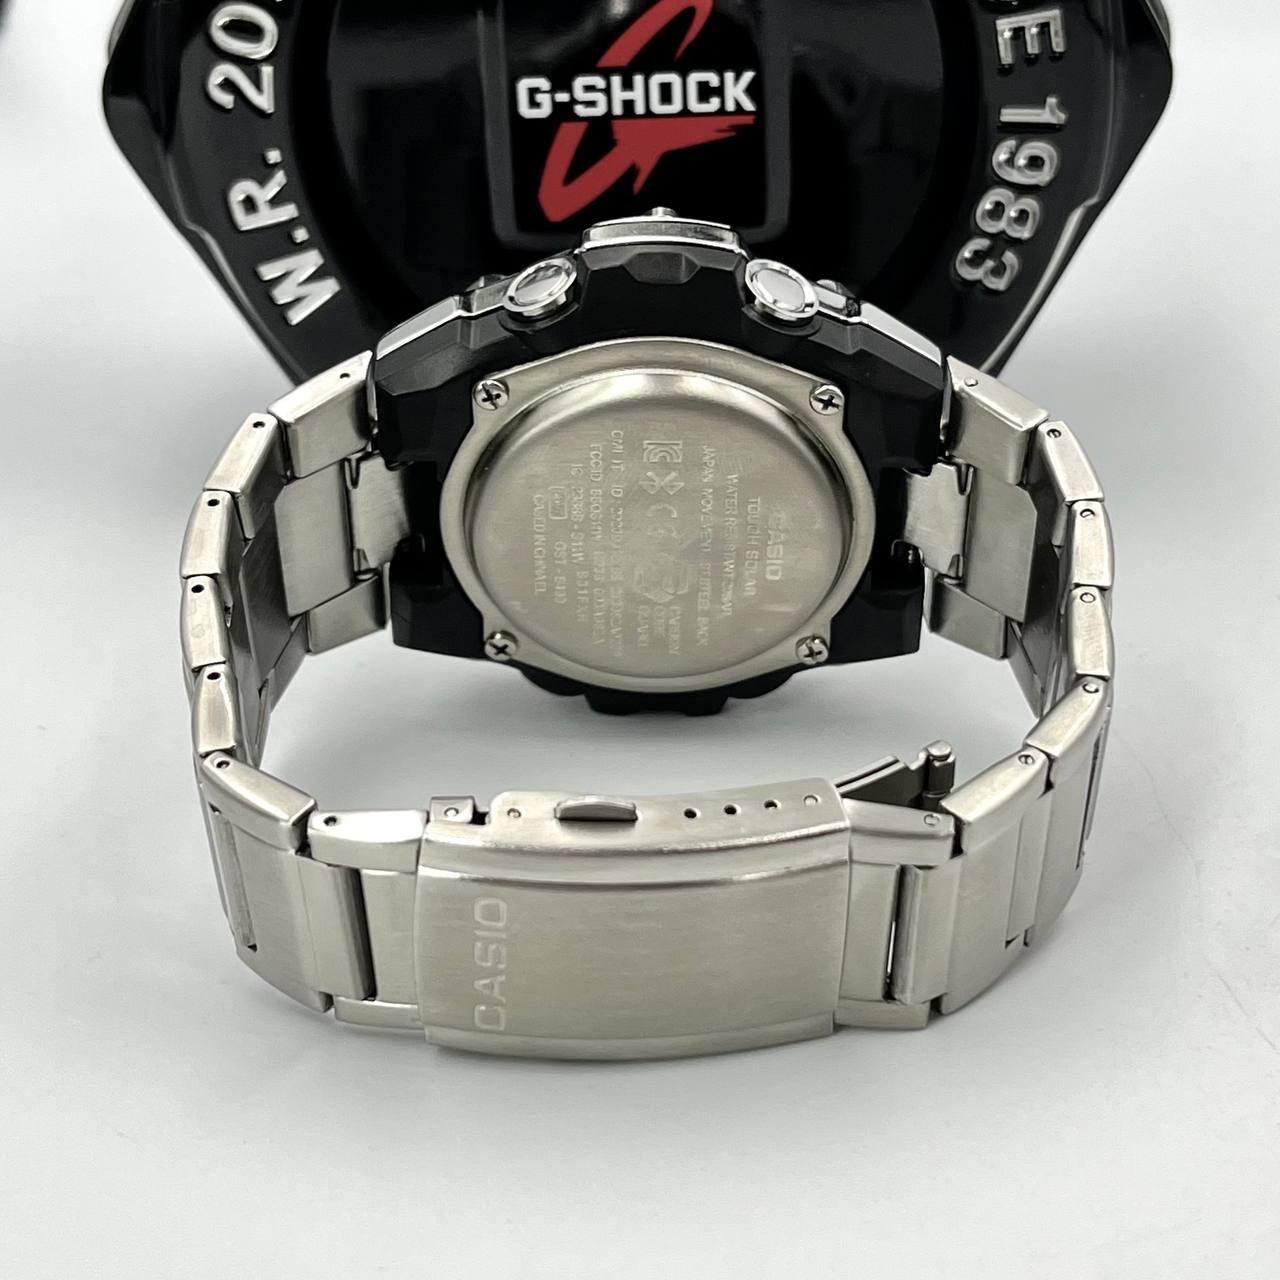 Relógio Masculino G-Shock Metal prata preto GST 100% funcional c/ caixa e a prova dagua